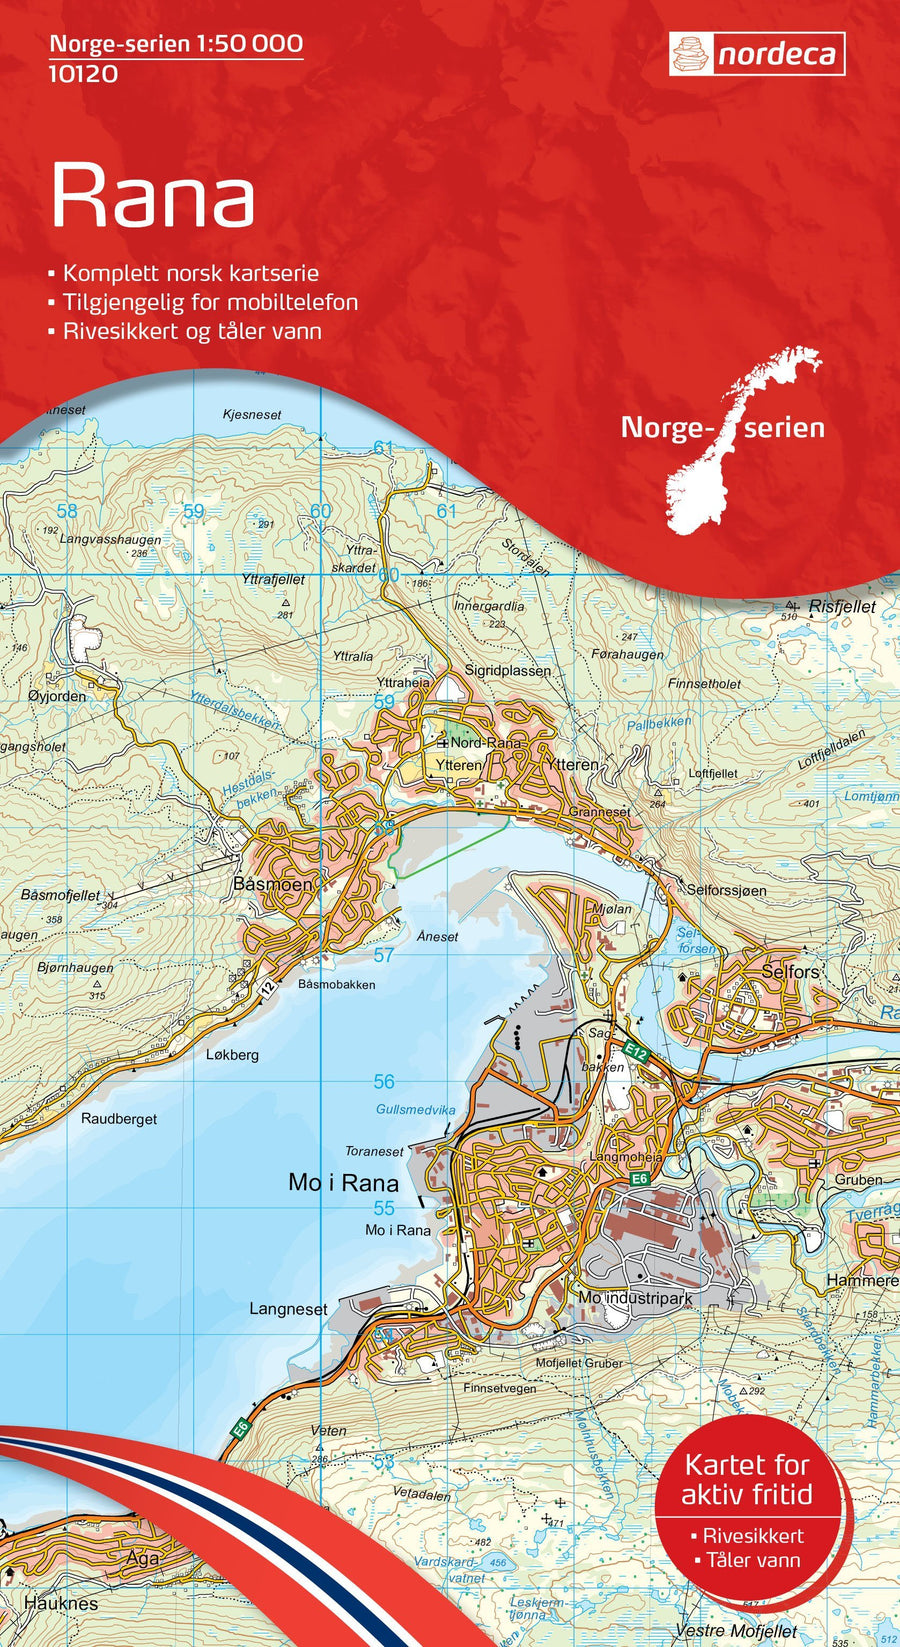 Carte de randonnée n° 10120 - Rana (Norvège) | Nordeca - Norge-serien carte pliée Nordeca 